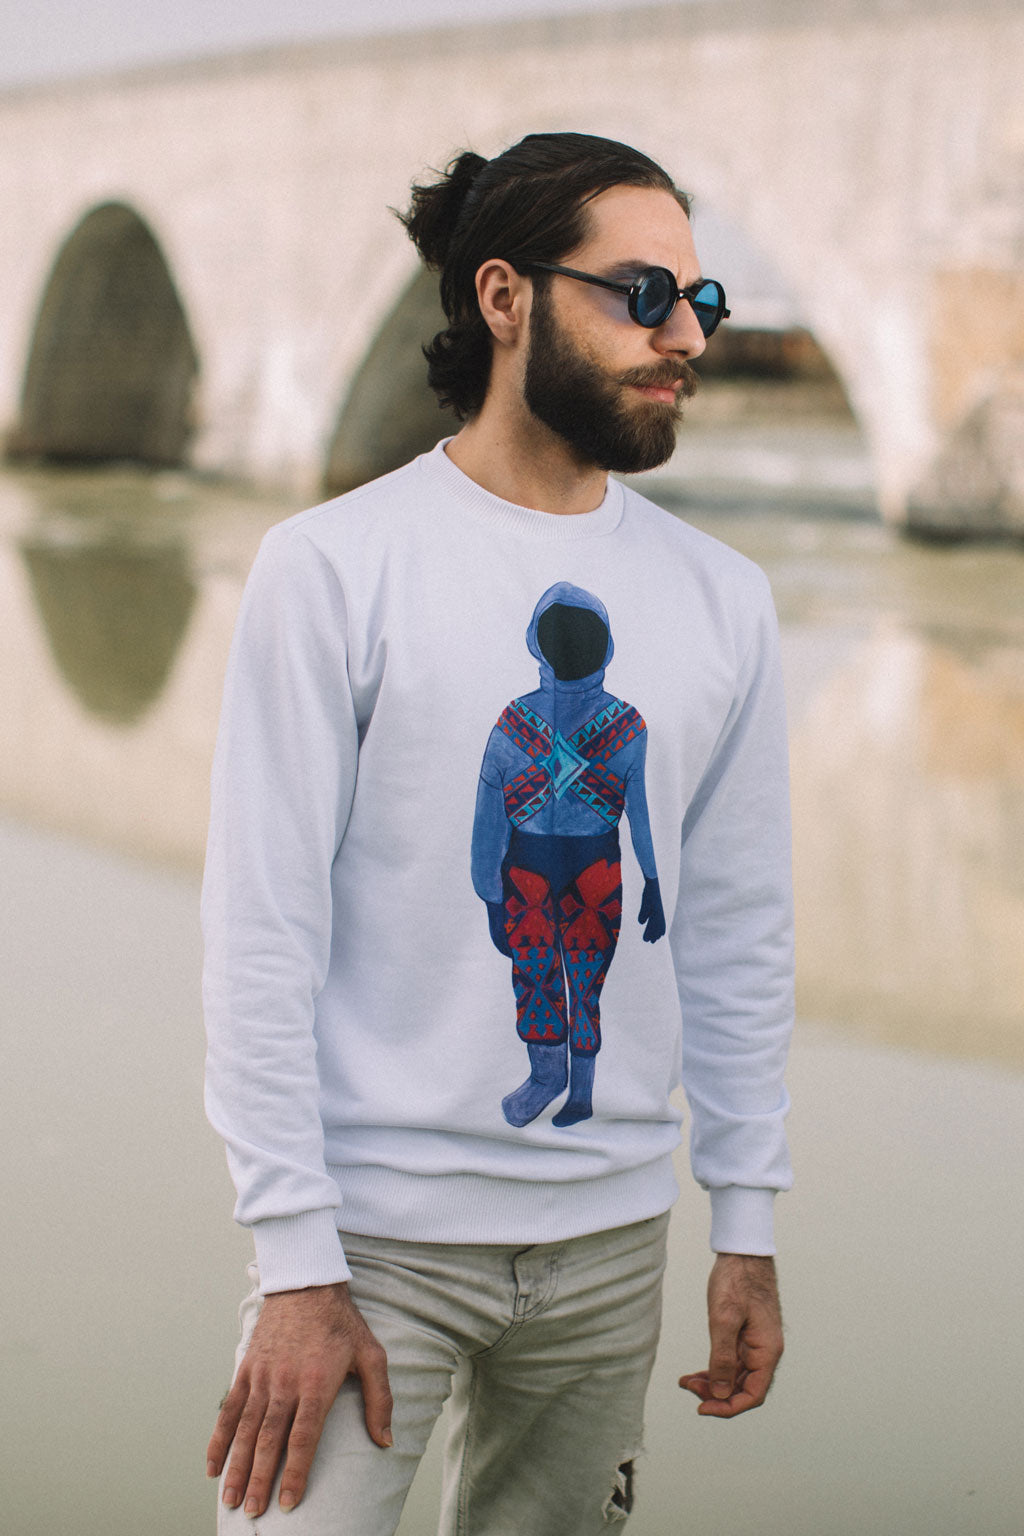 Ava Sweatshirt by Abôvian, Product type - Sweater, Designed by Shabeeg